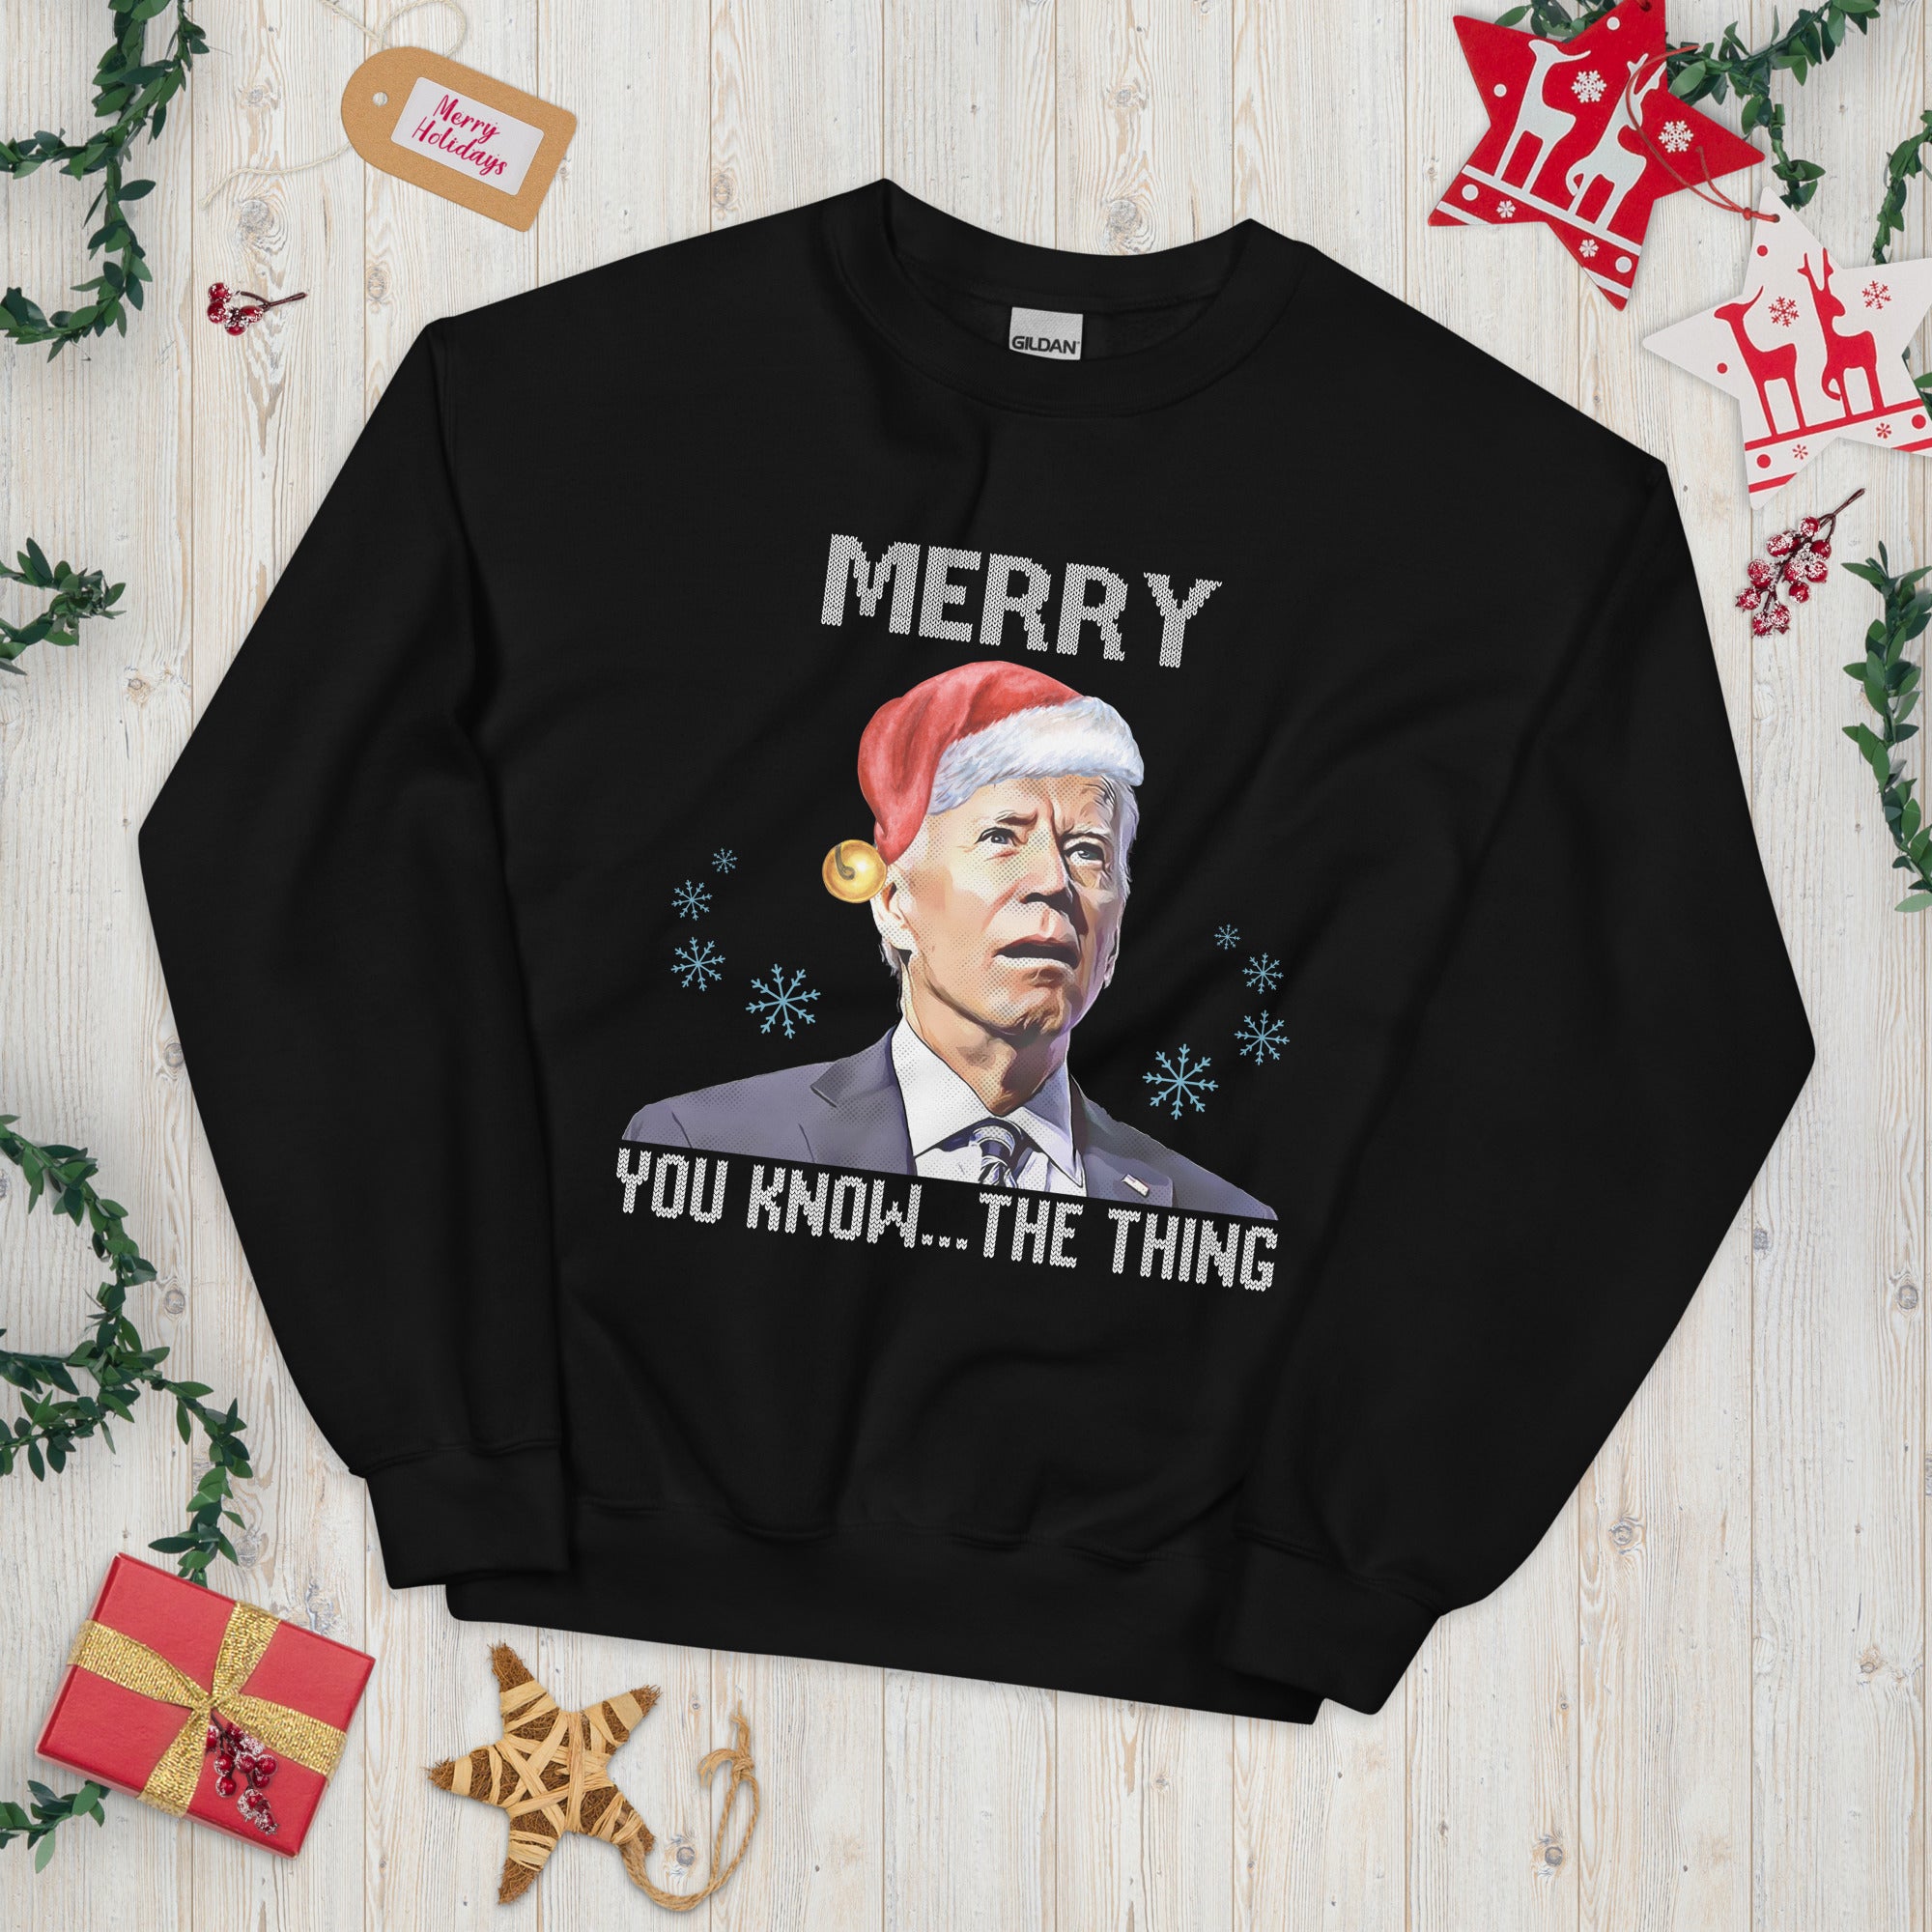 Merry You Know The Thing, Christmas Biden Sweatshirt, Funny Confused Biden Xmas Shirt, Santa Joe Biden Sweater Republican Gift, FJB Crewneck